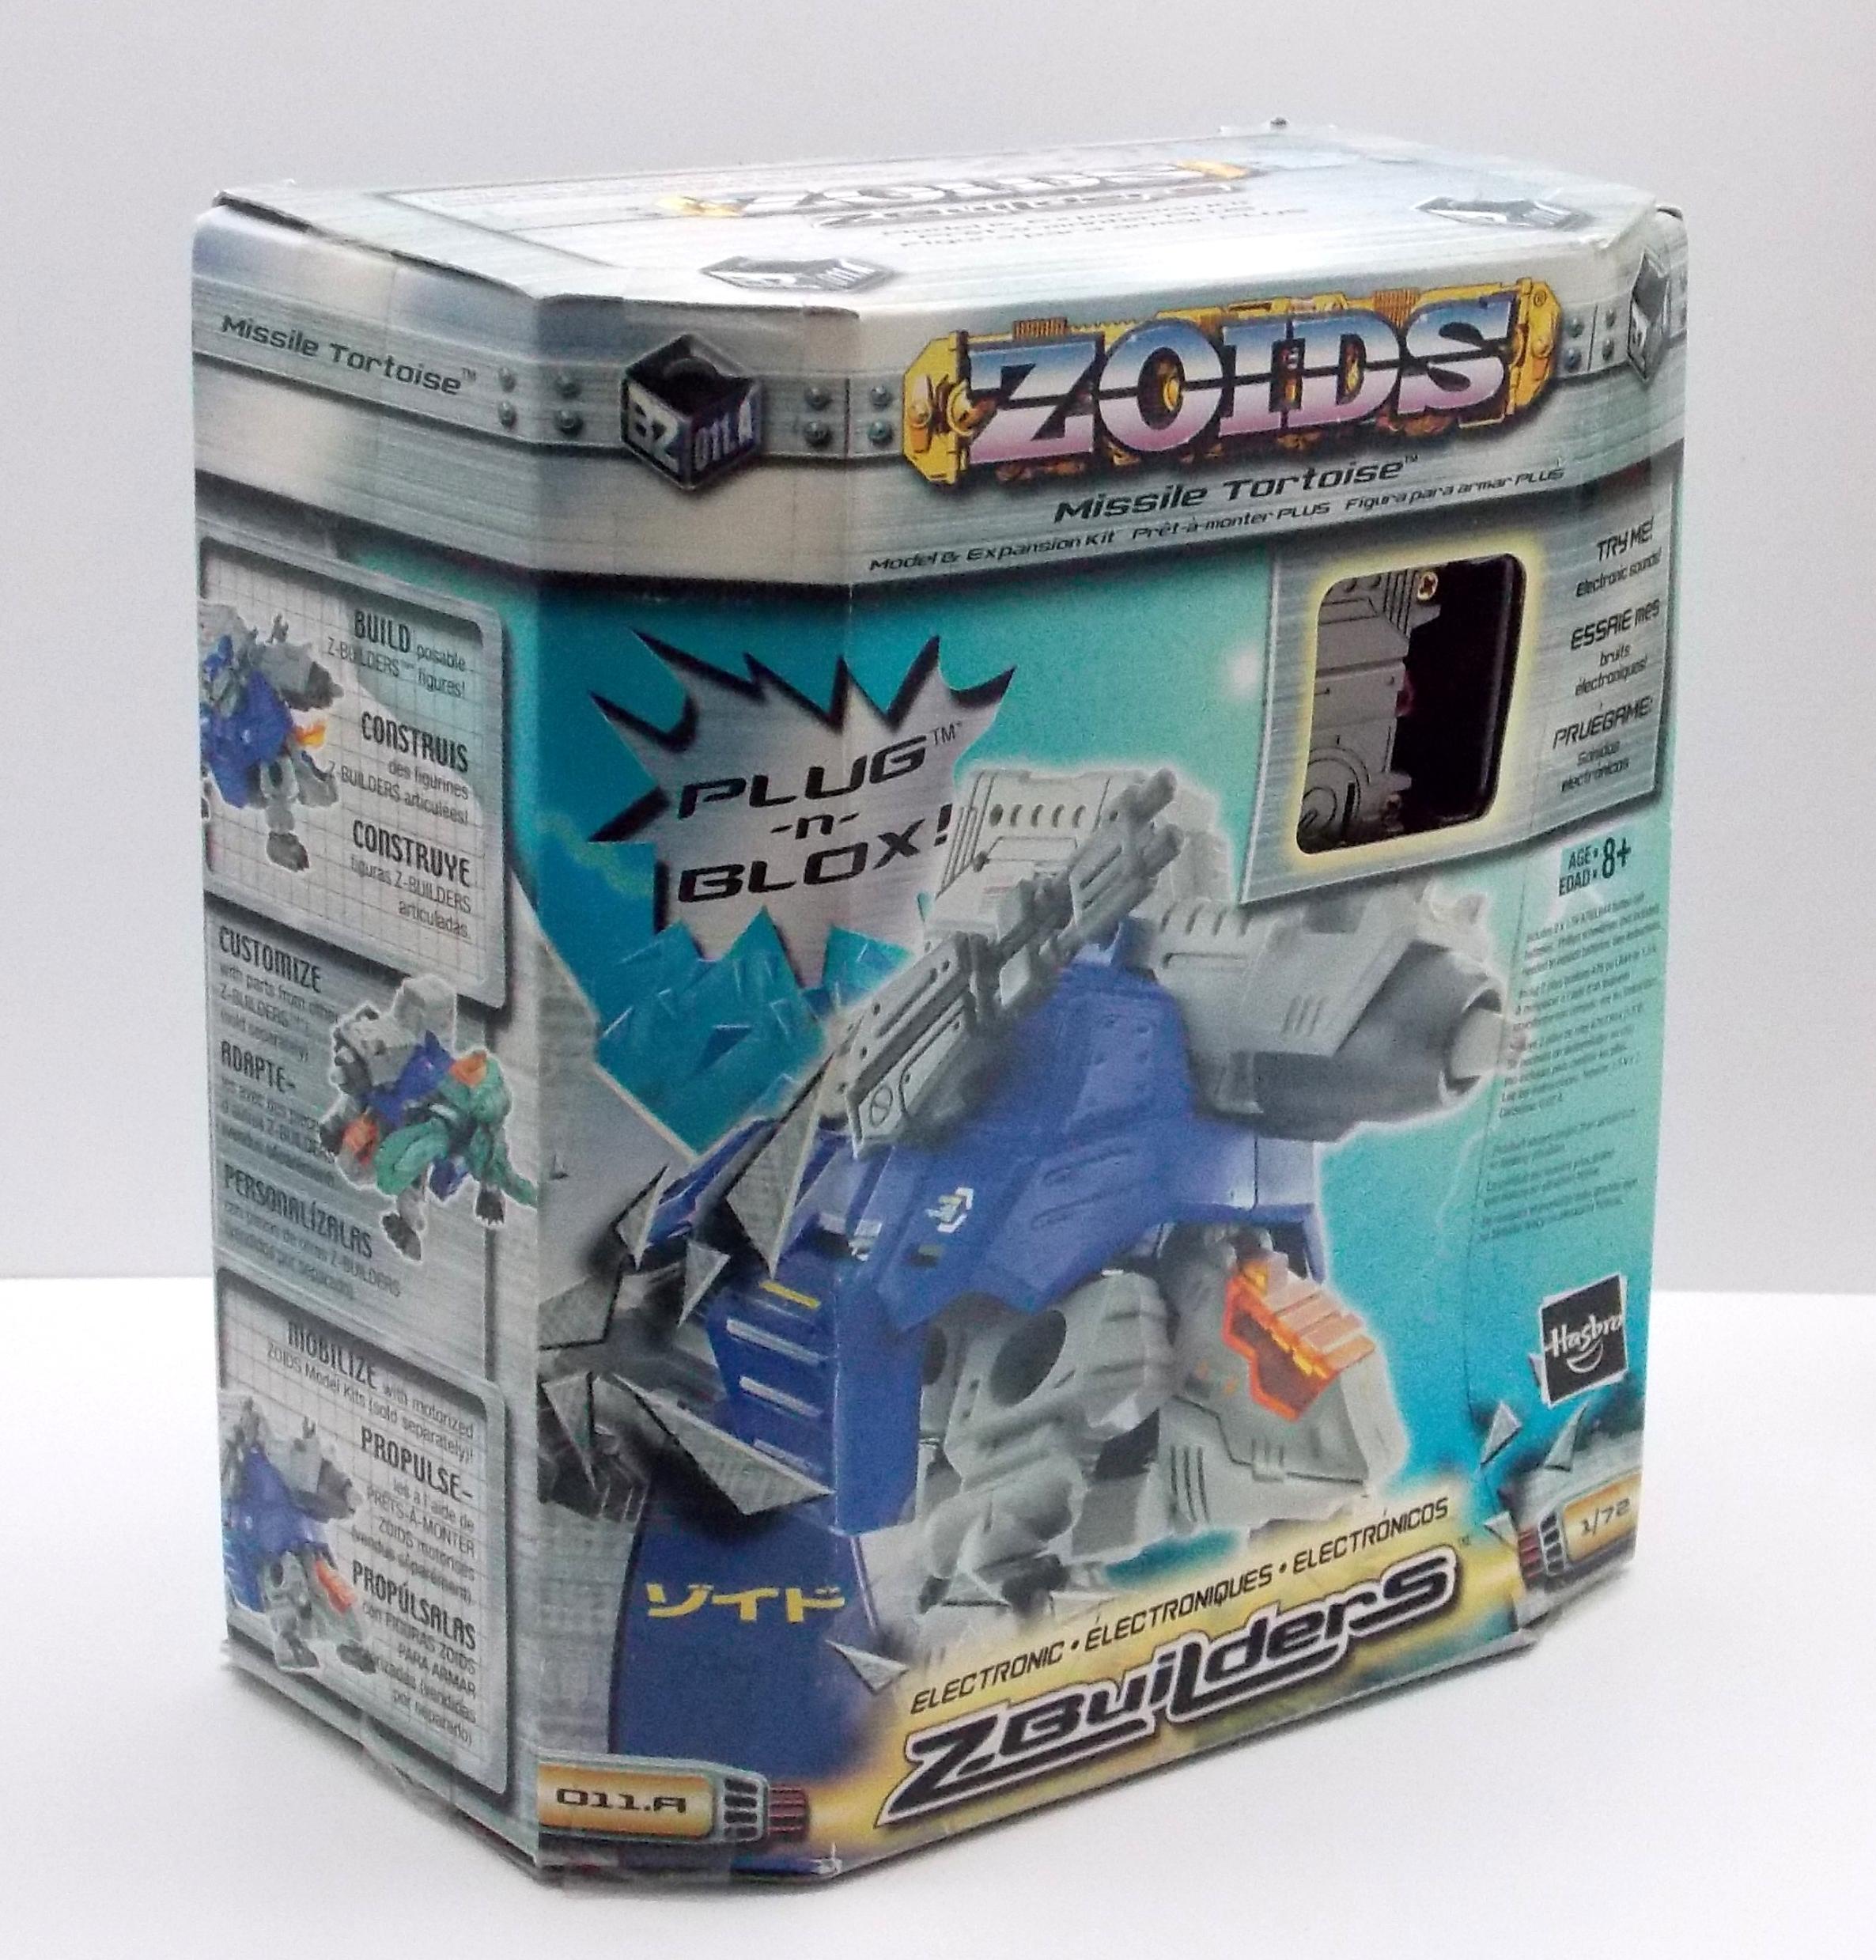 Zoids Missile Tortoise Plug-N-Blox Z-Builders Action Figure Model Kit